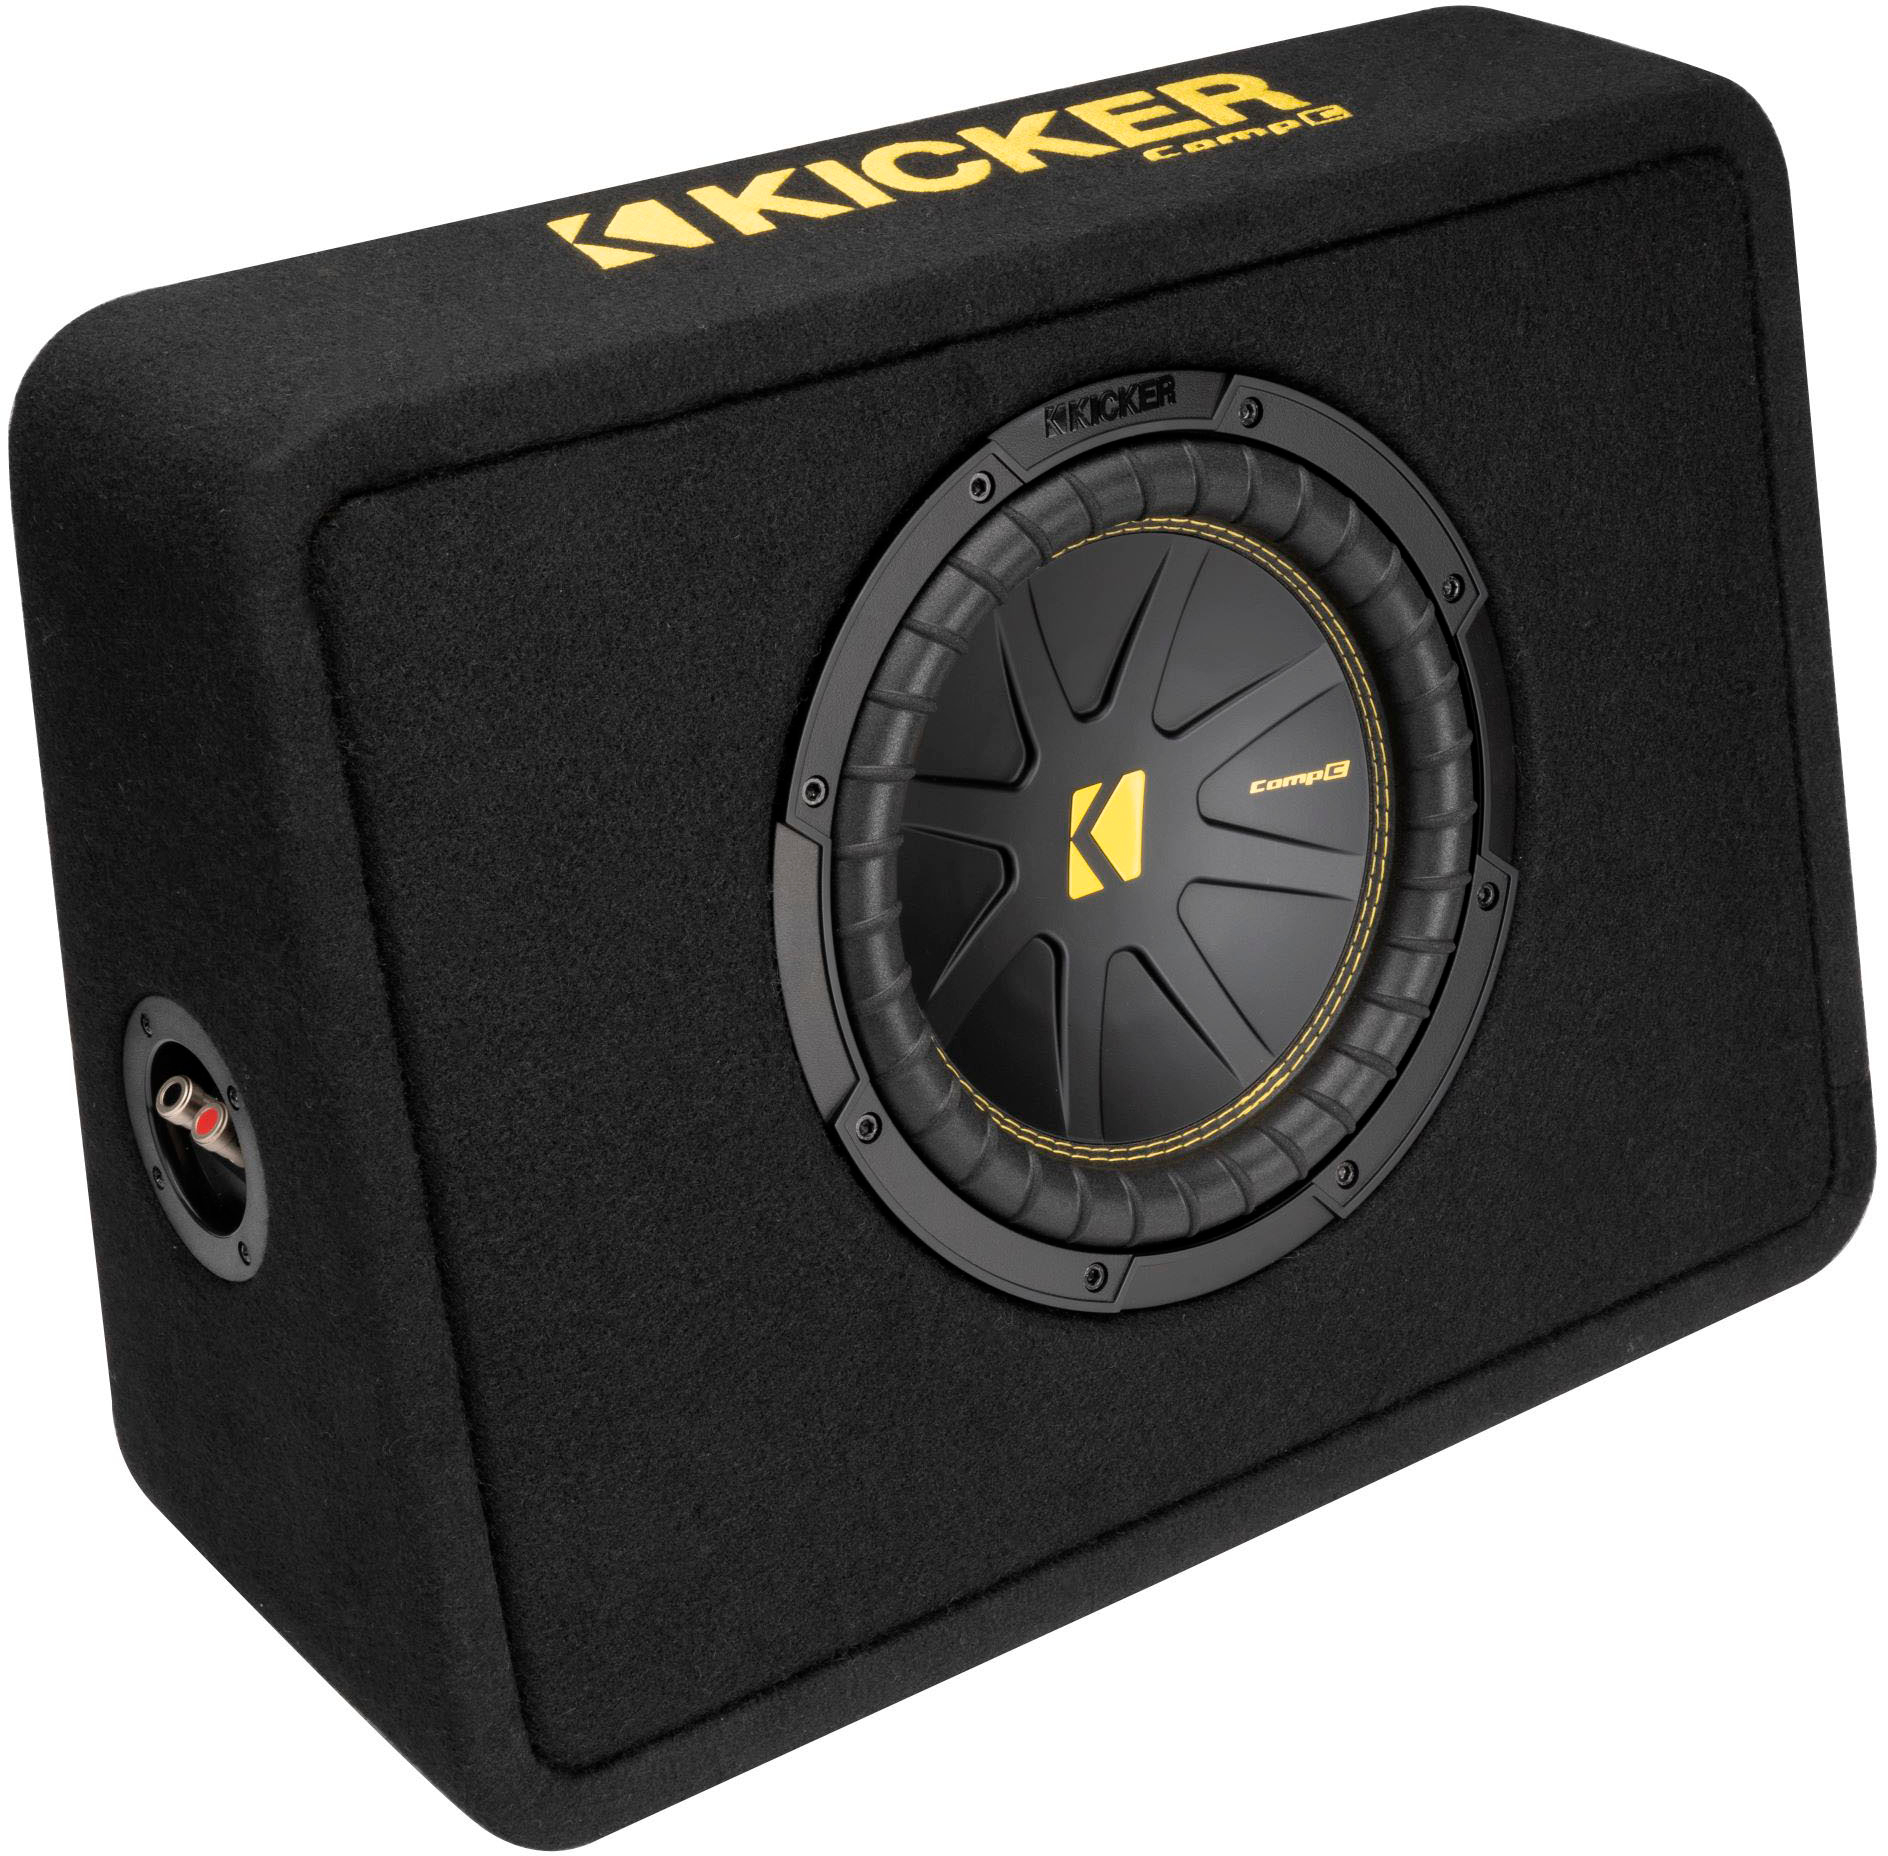 Back View: KICKER - CompC 10" Single-Voice-Coil 4-Ohm Loaded Subwoofer Enclosure - Black